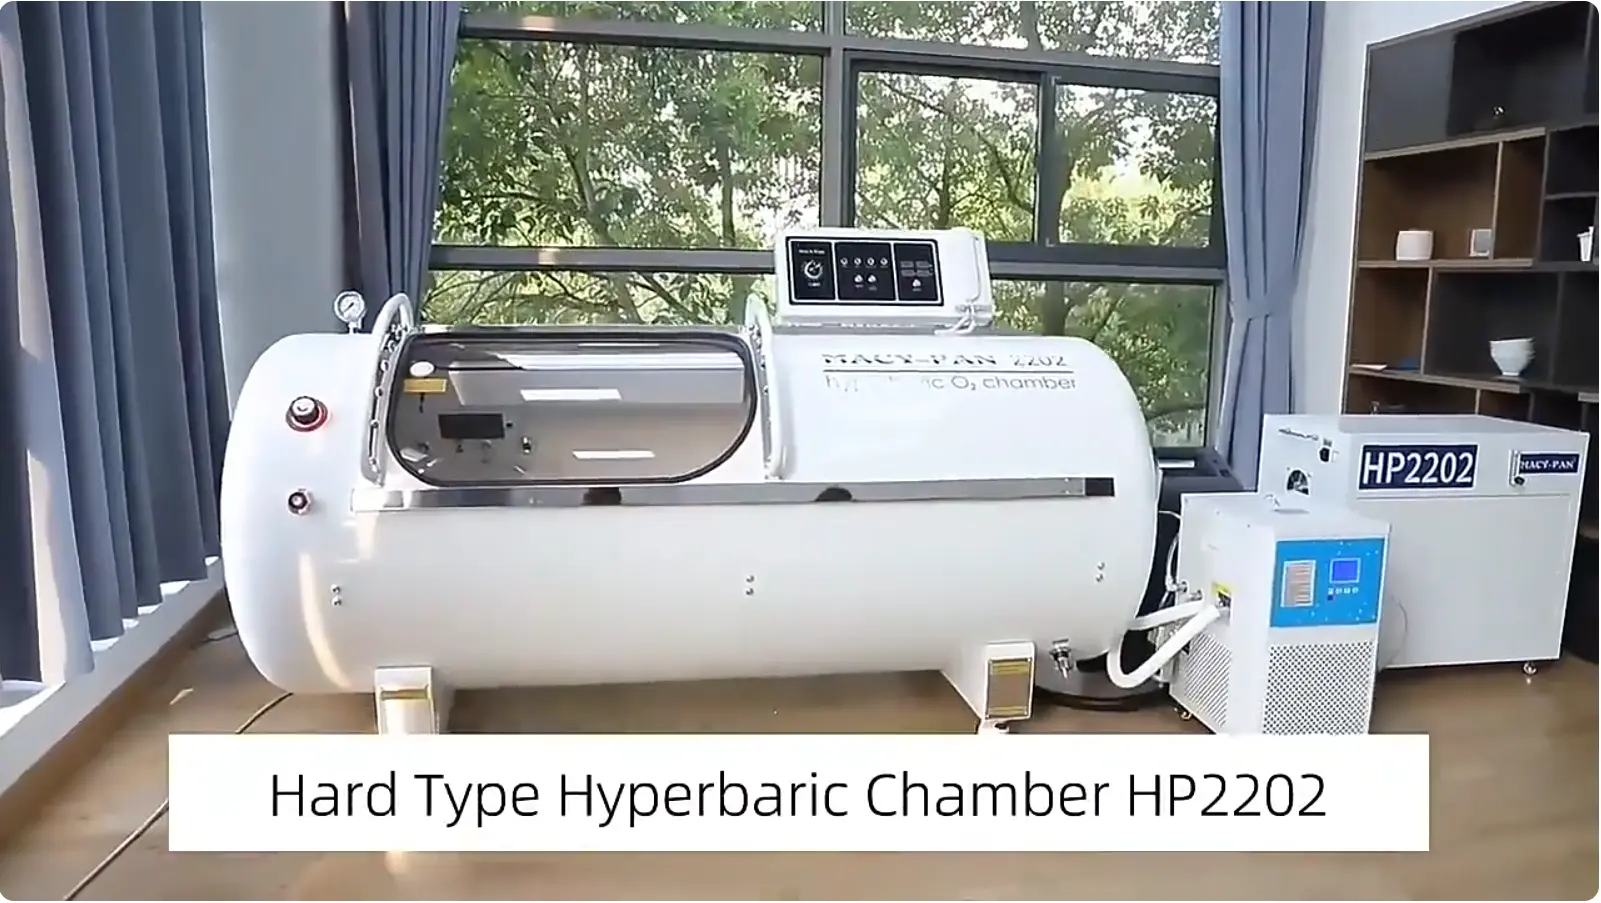 Hard Type Hyperbaric Chamber HP2202